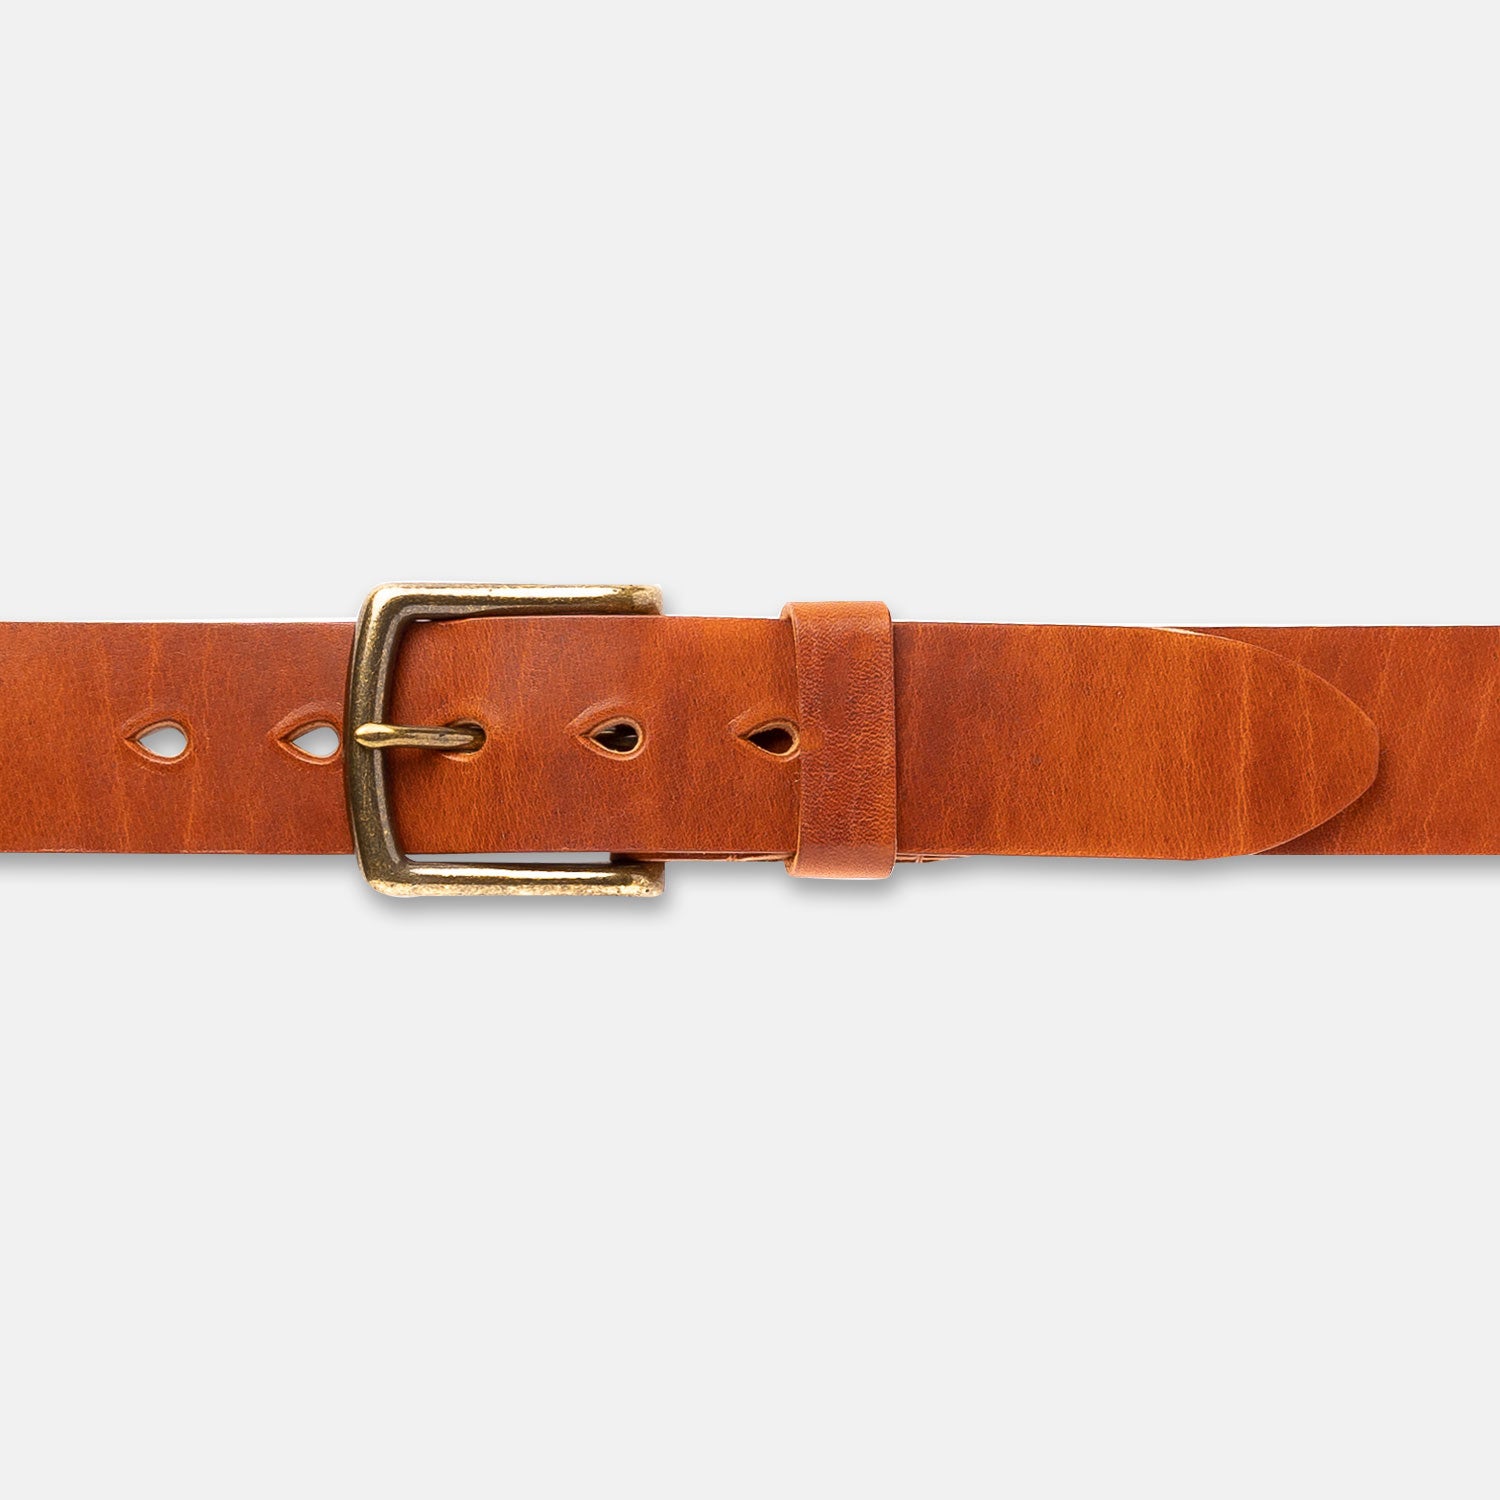 Women's Medium Brown 1.5 Leather Belt